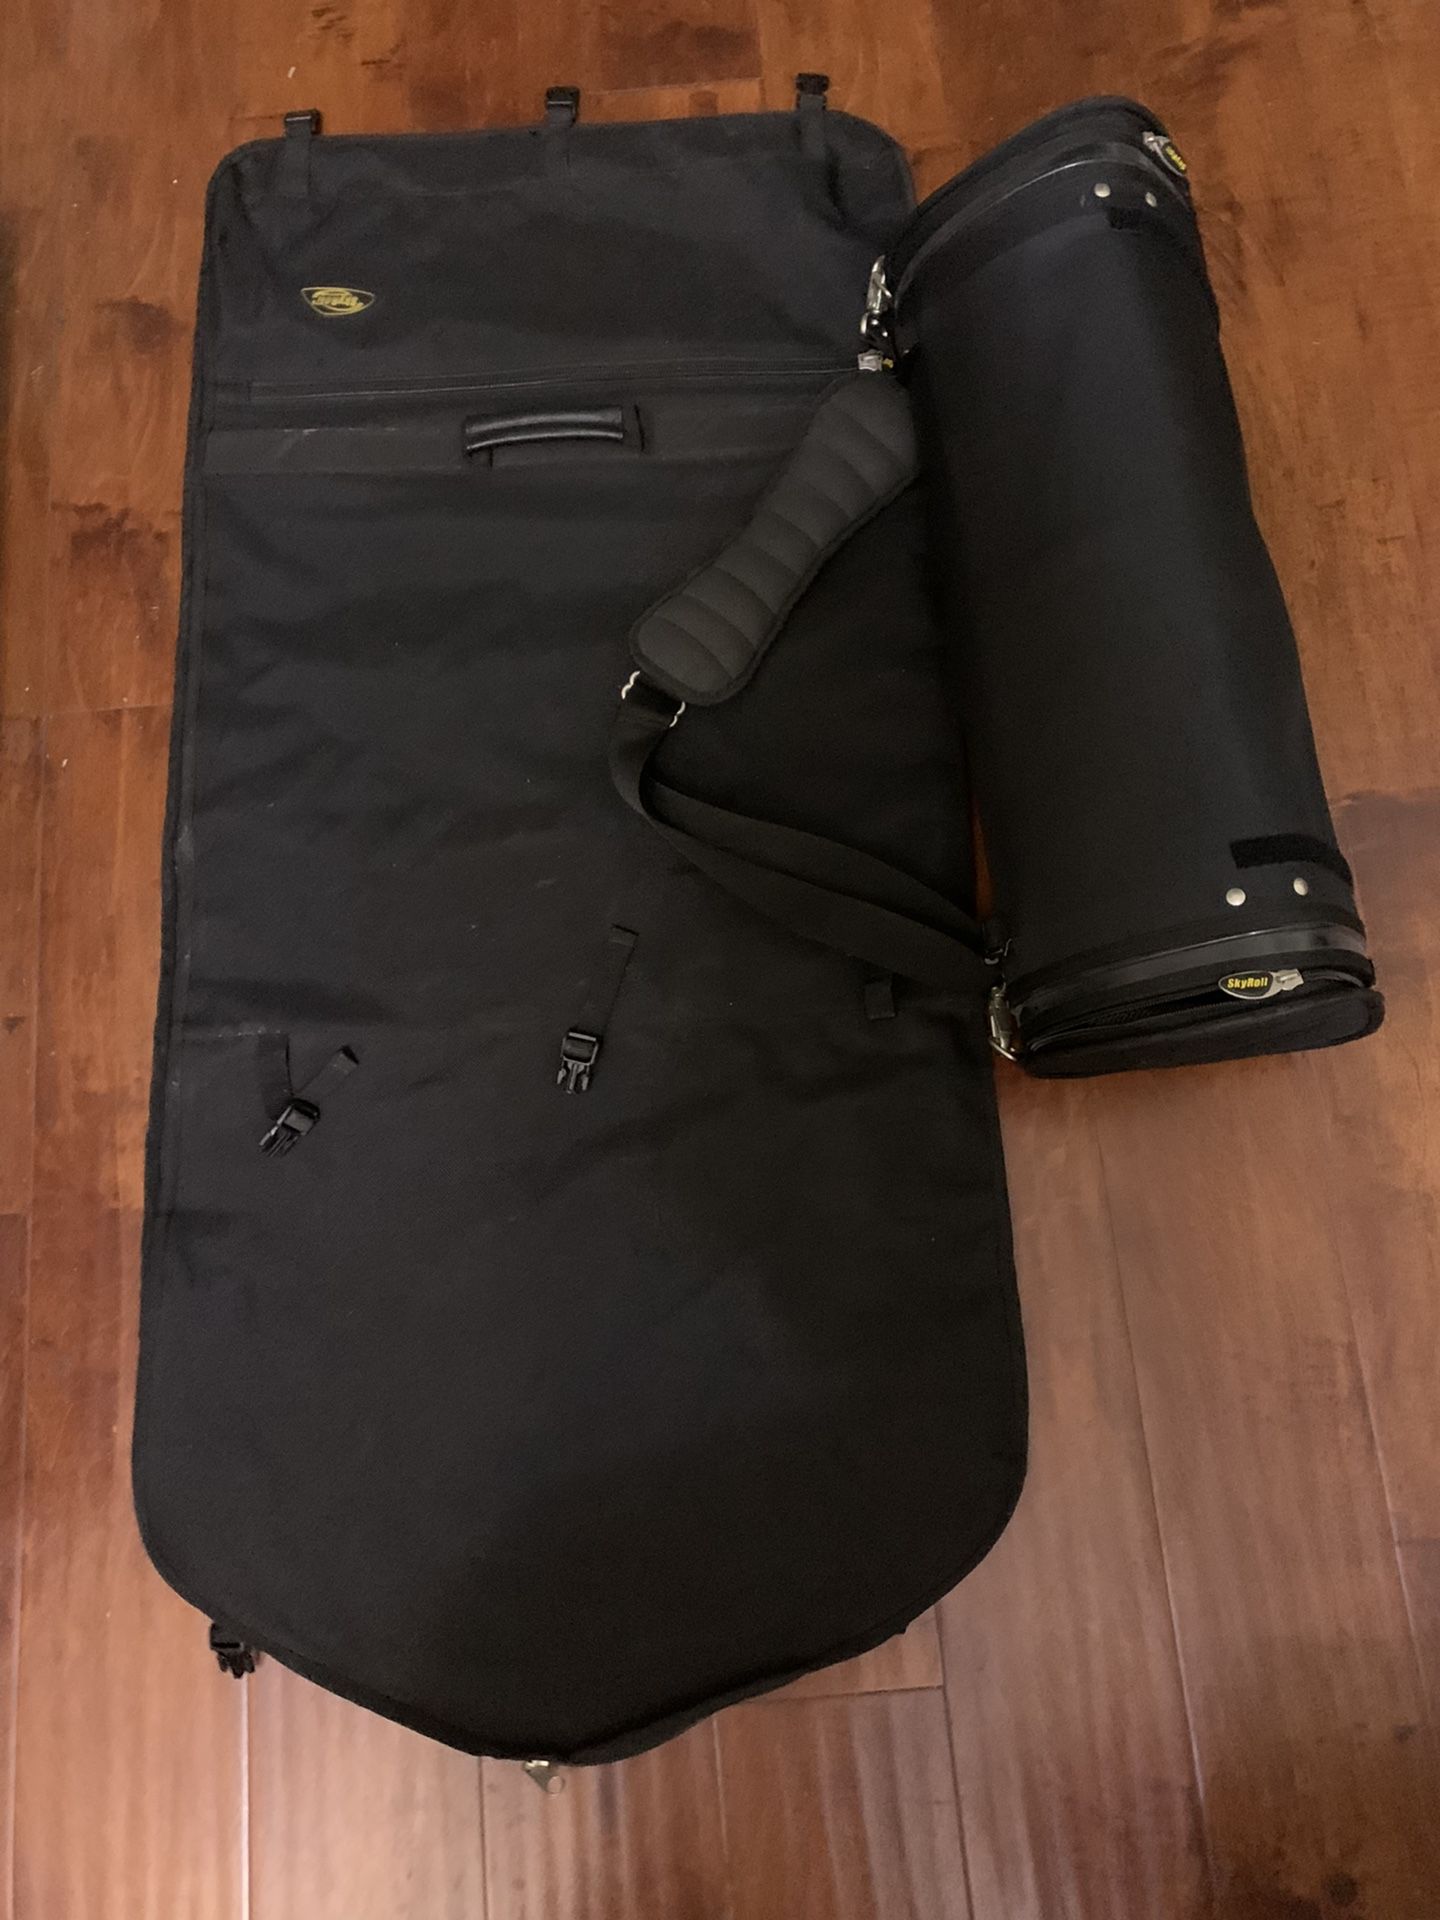 Skyroll 24" Roll Up Garment Travel  Lp km Bag Carry On Luggage Black Read